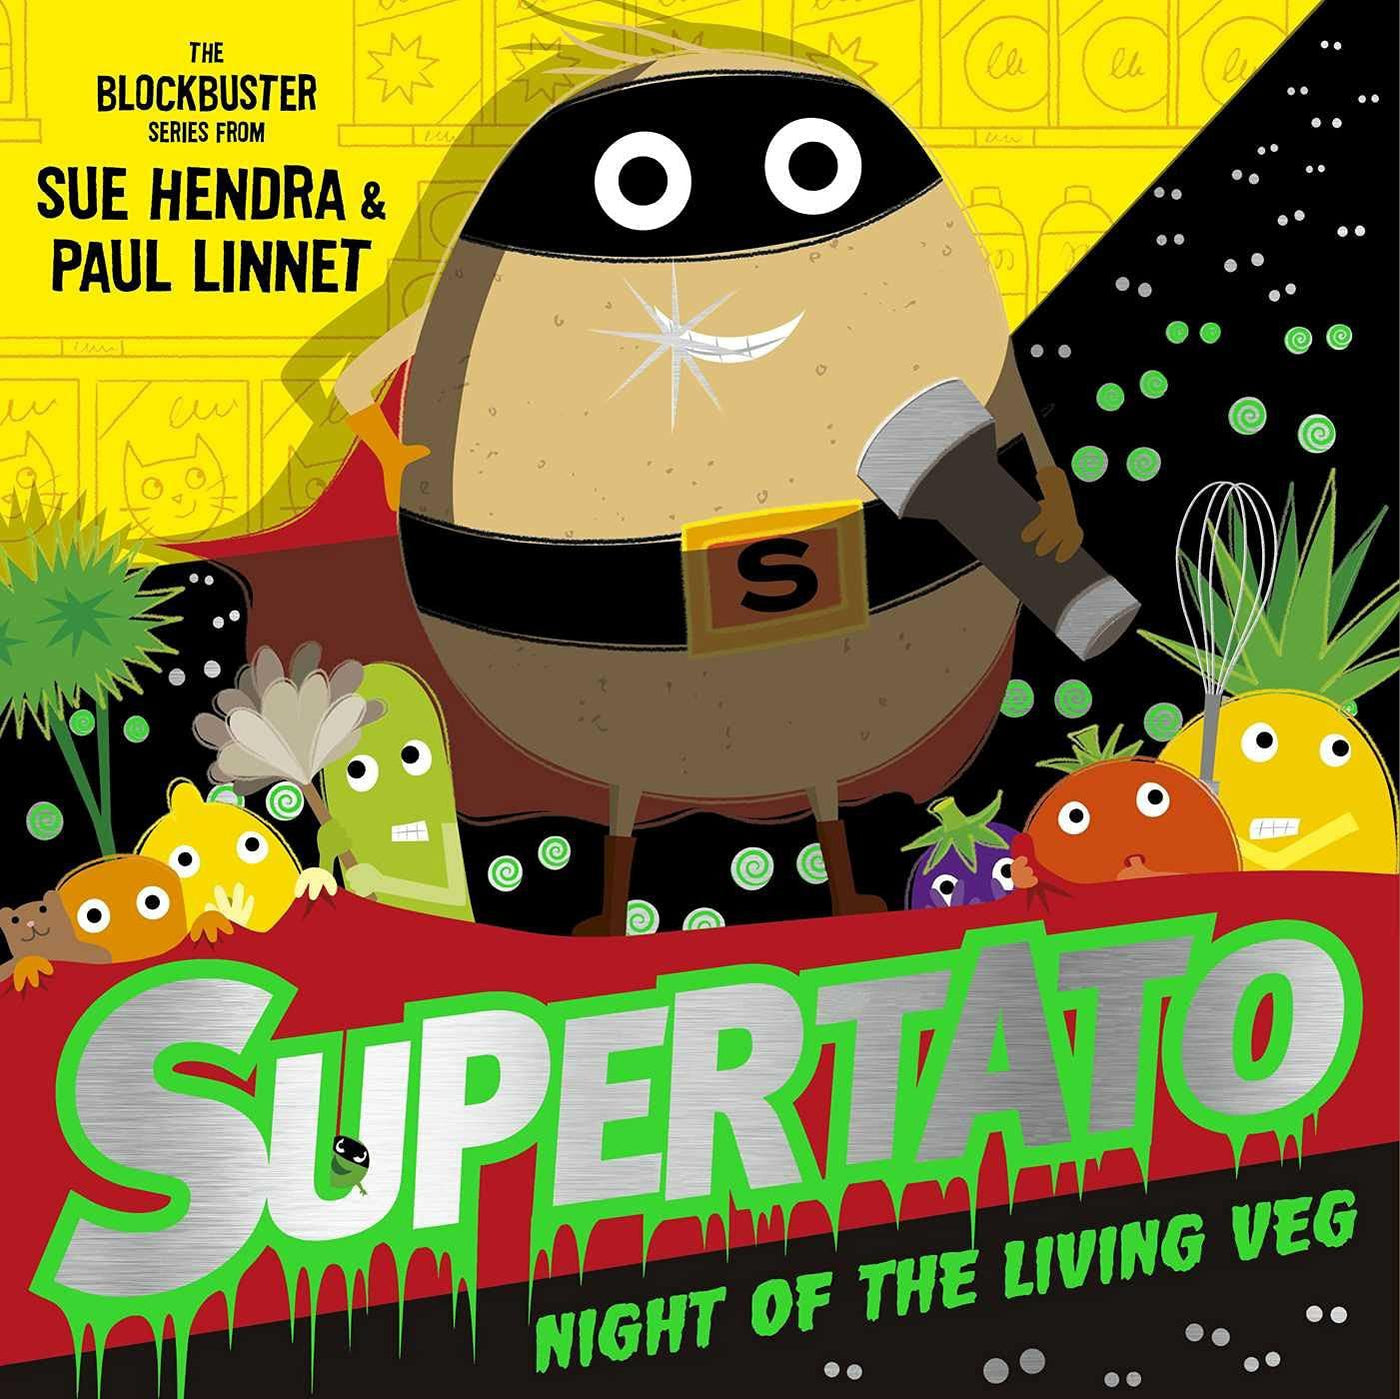 Supertato Night Of The Living Veg: A Brand New Spooky Halloween Adventure! - Sue Hendra & Paul Linnet